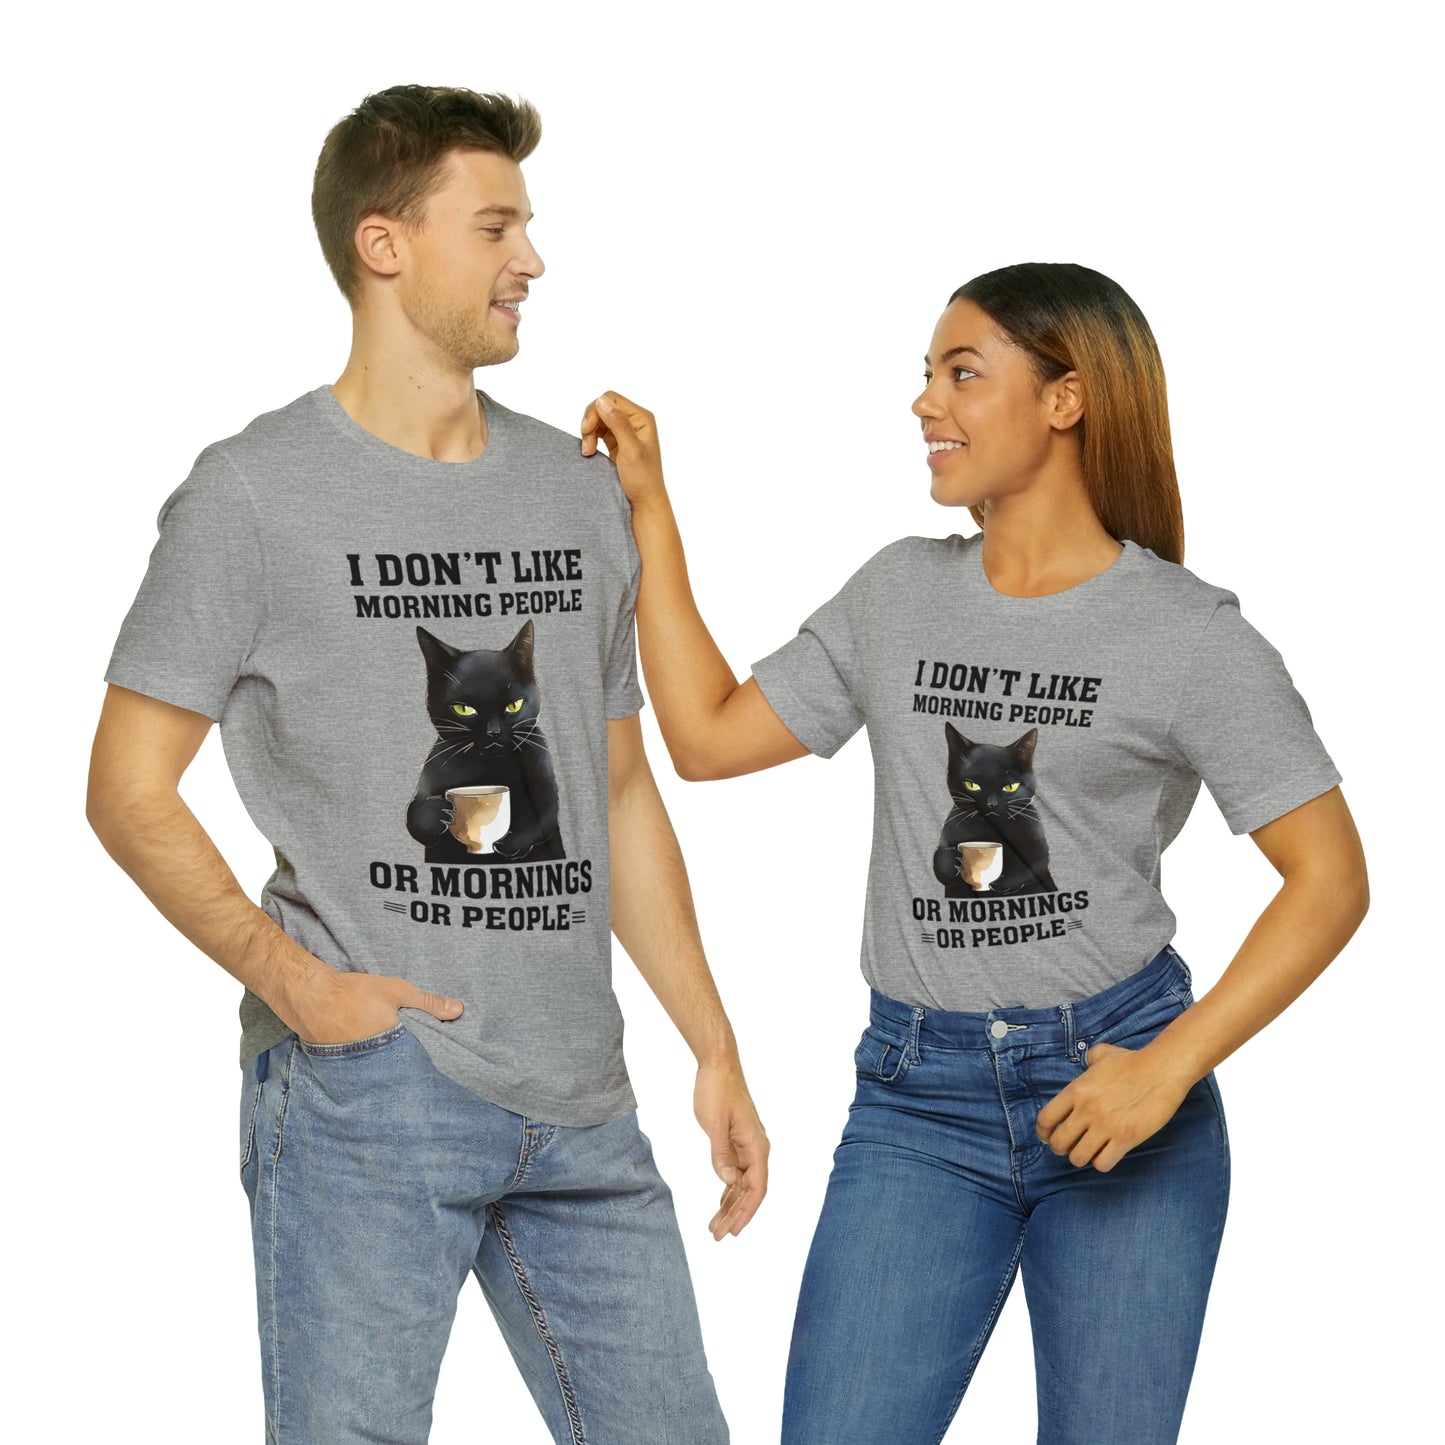 Morning Cat T-shirt